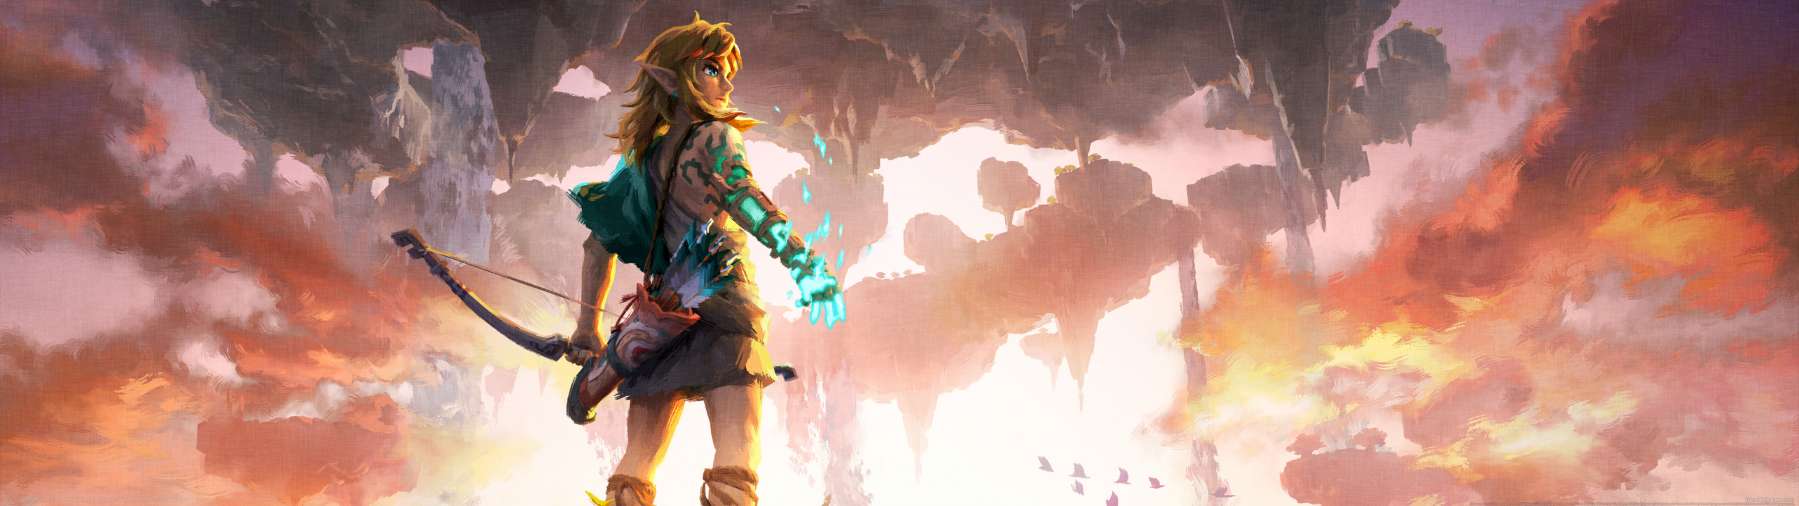 The Legend Of Zelda: Tears of the Kingdom wallpaper or background